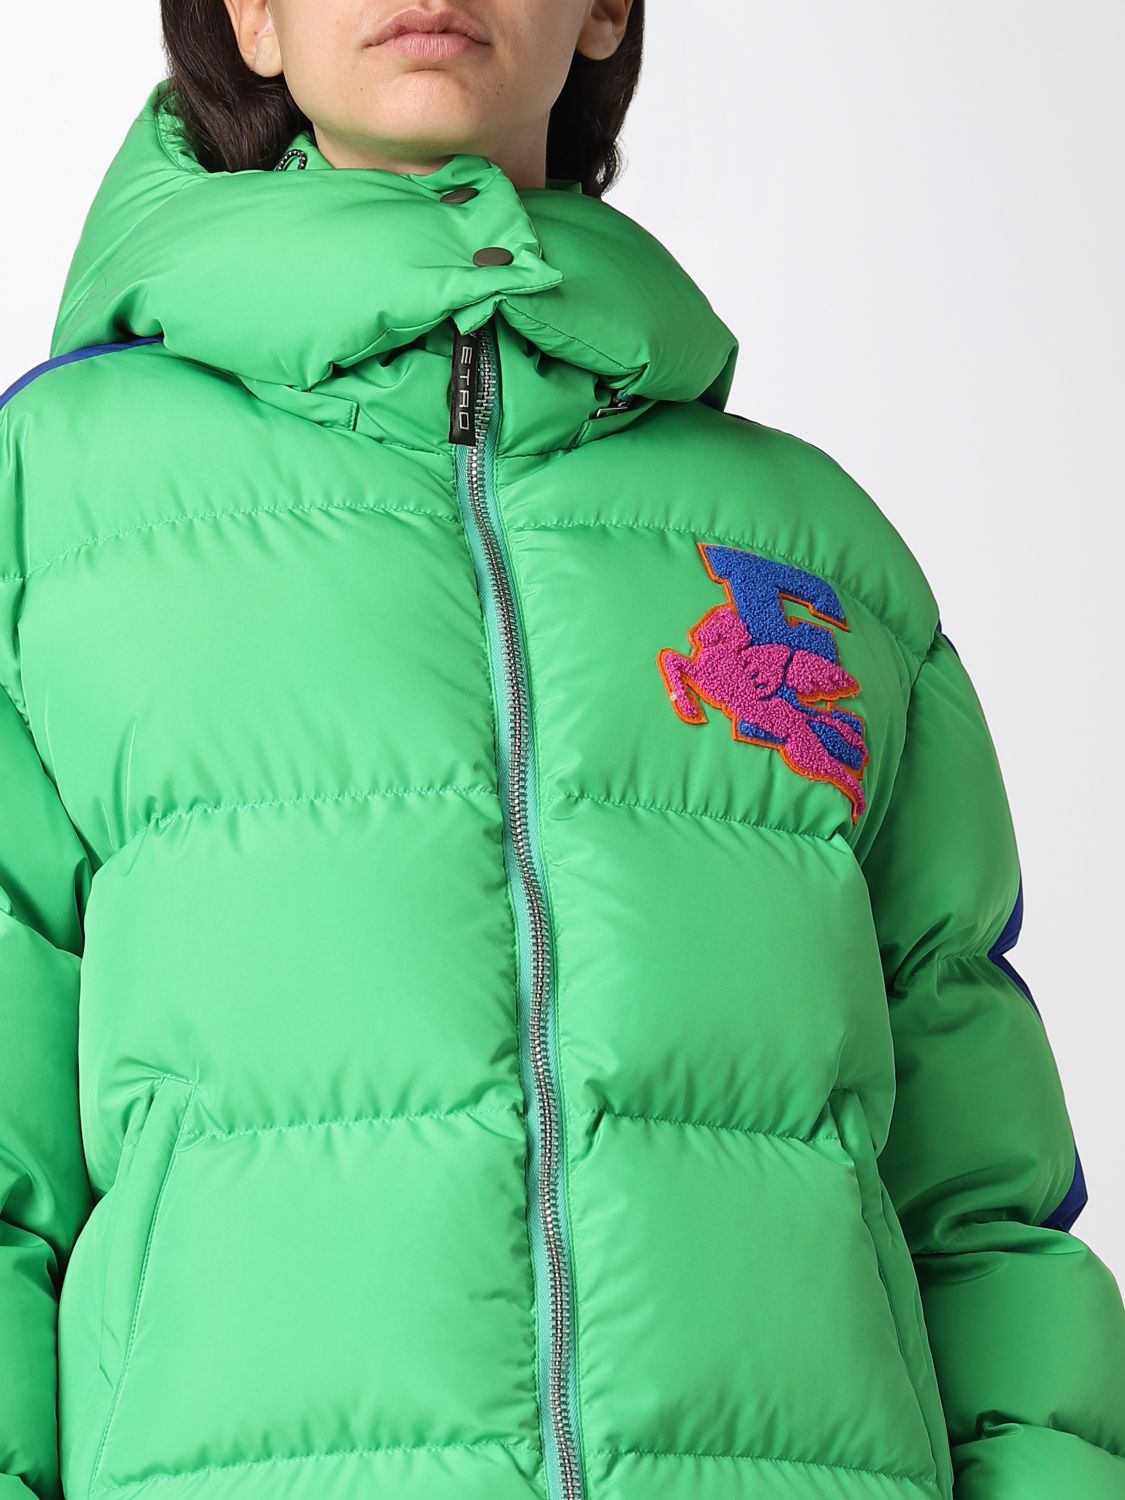 Napier factor Onrustig Etro Outlet: oversize down jacket with Pegaso logo - Green | Etro jacket  180608104 online on GIGLIO.COM